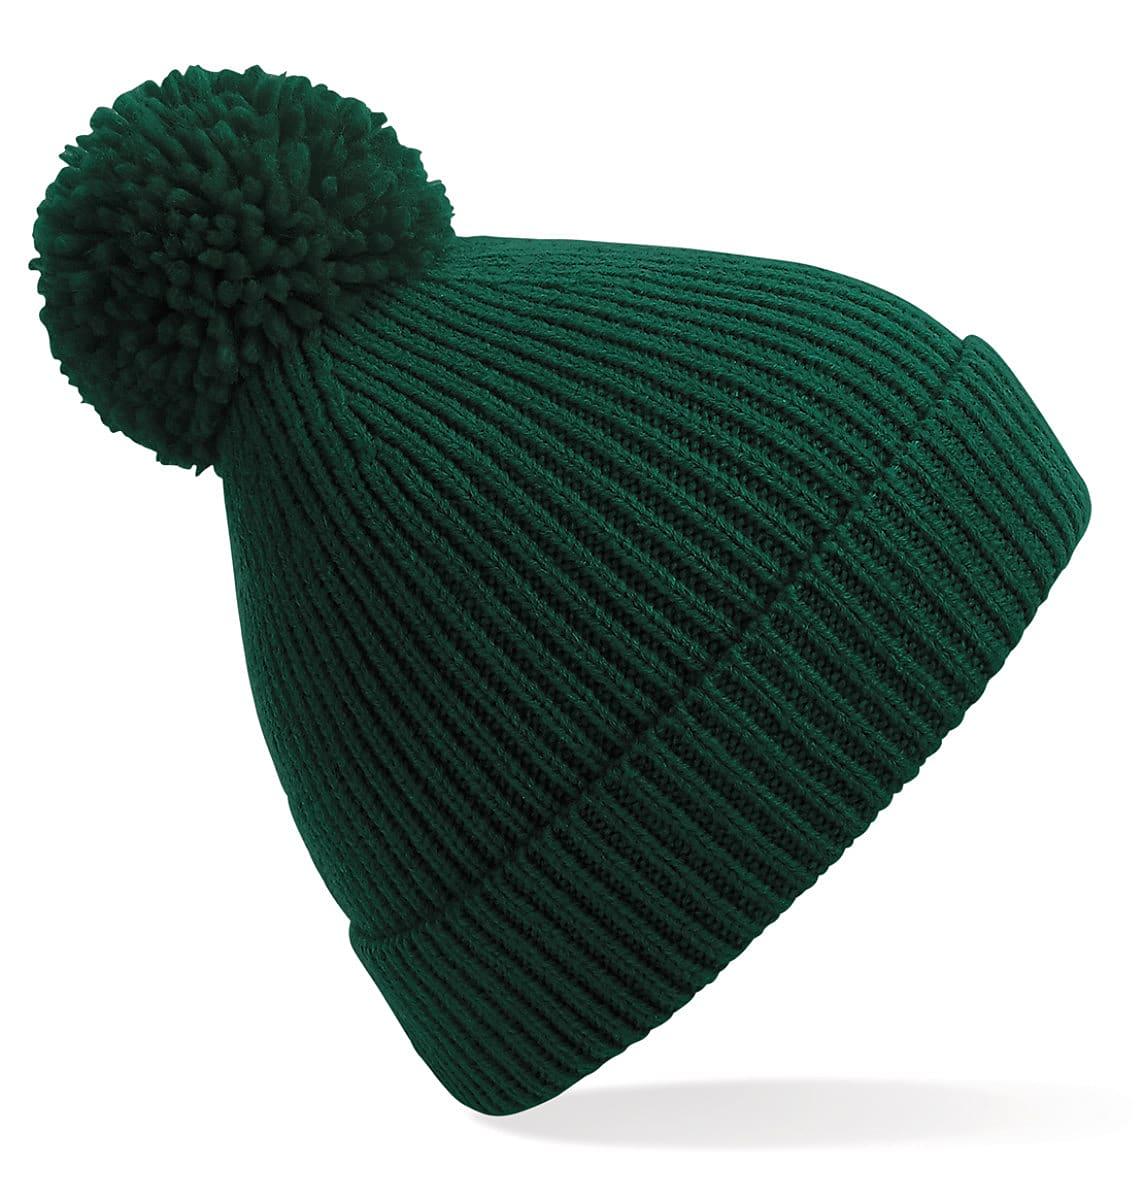 Beechfield Knit Ribbed Pom Pom Beanie Hat in Bottle Green (Product Code: B382)